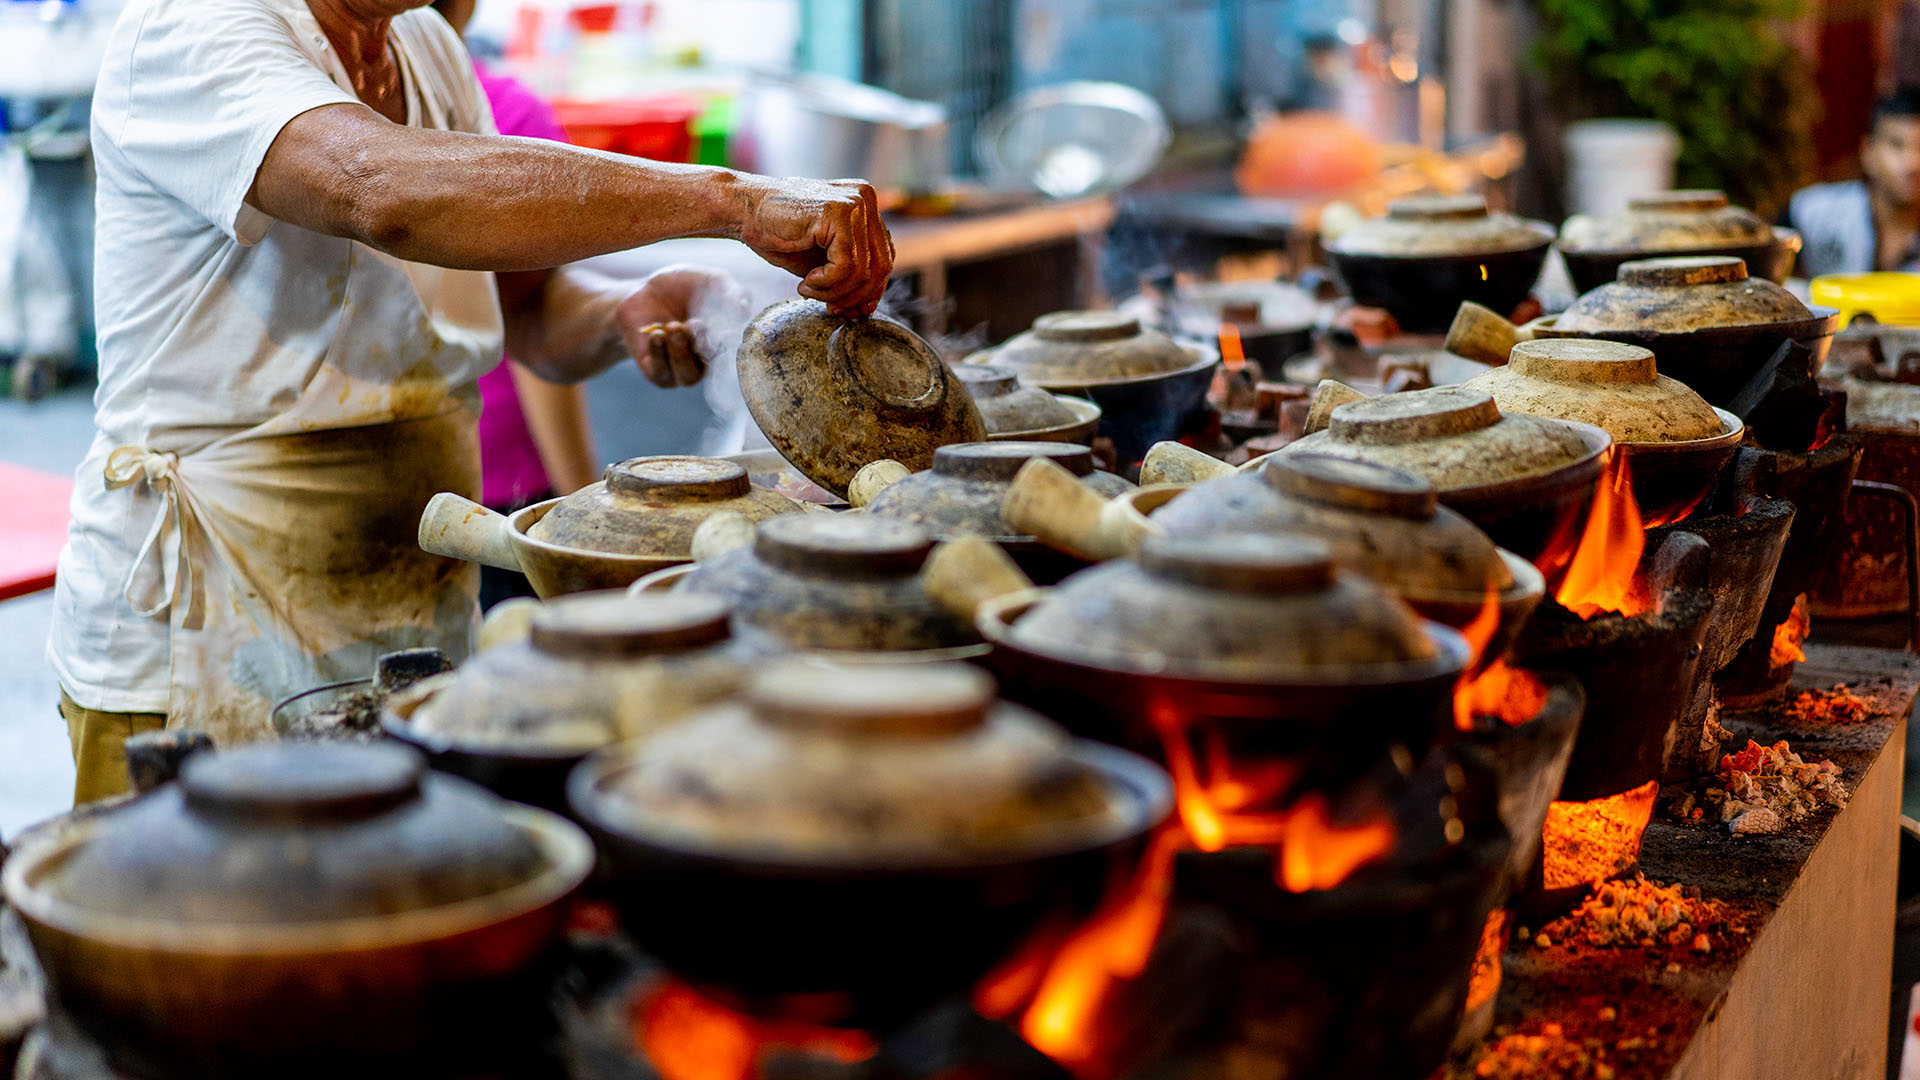 A vendor cooks street food in Singapore